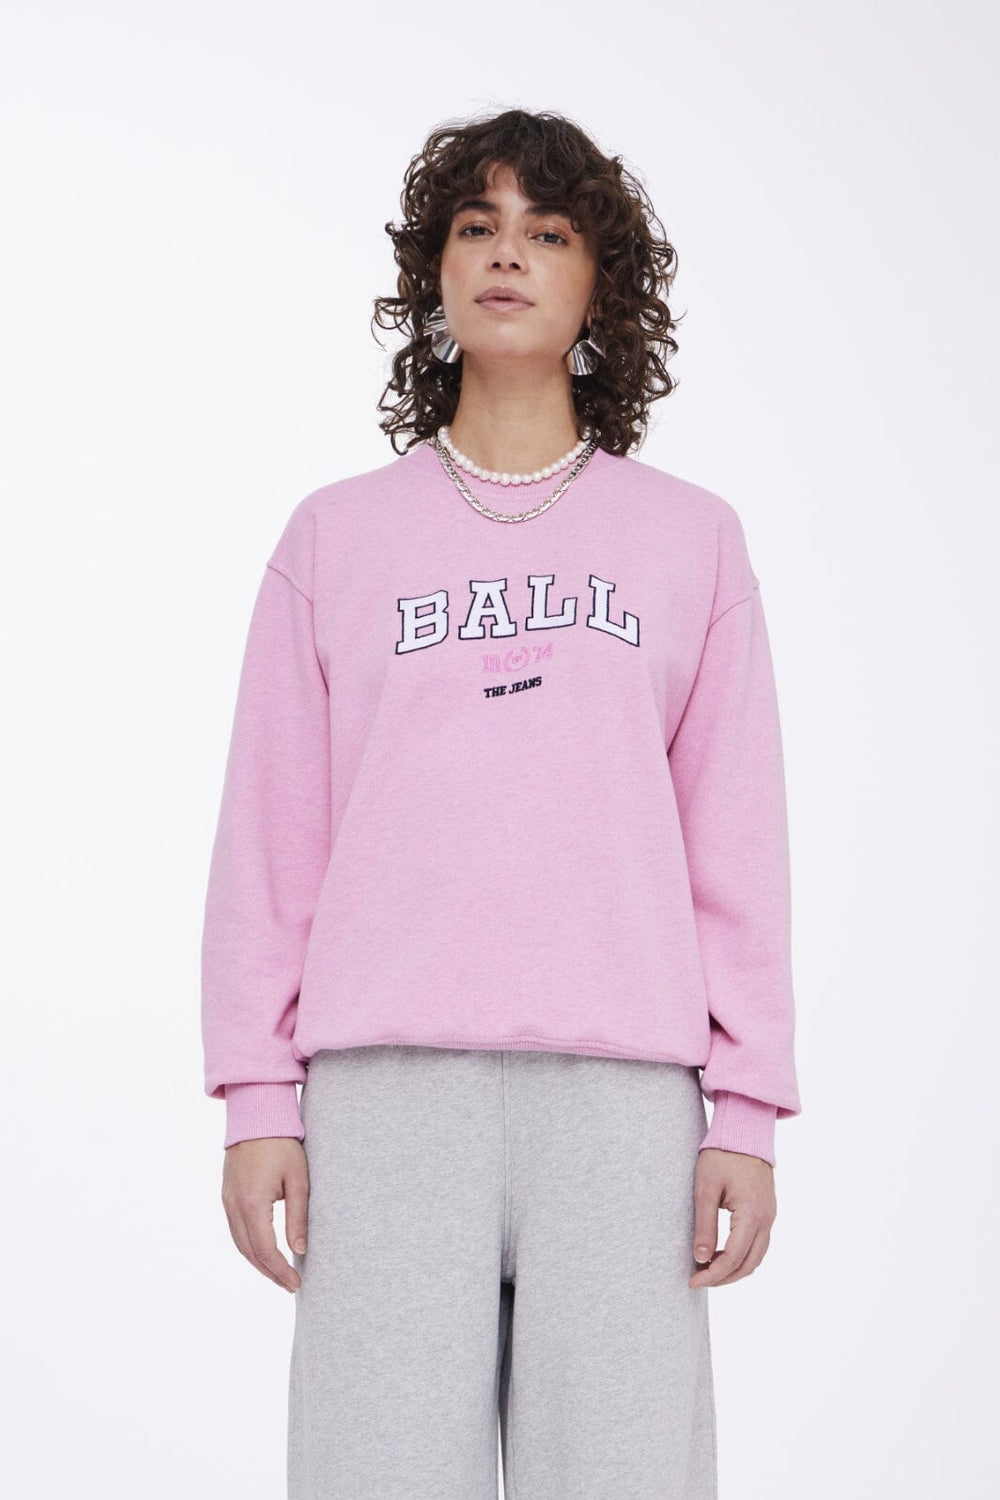 Ball - L. Taylor Sweatshirt - 1621261 Pink Melange Sweatshirts 